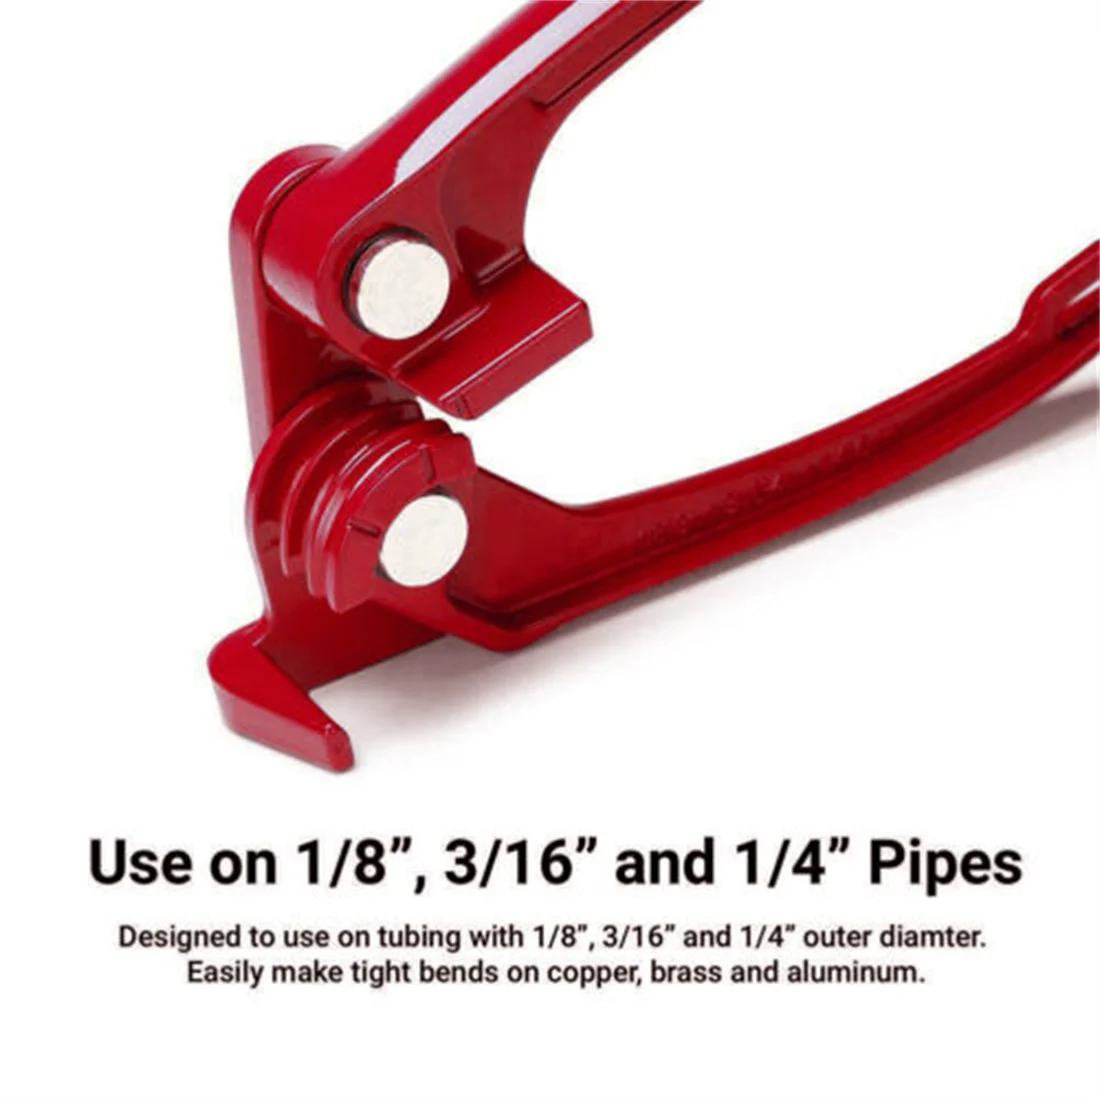 Aspligo Air conditioner Pipe Tube bender 3-in-1 manual tube bending tool for most metals 1/8 3/16 1/4